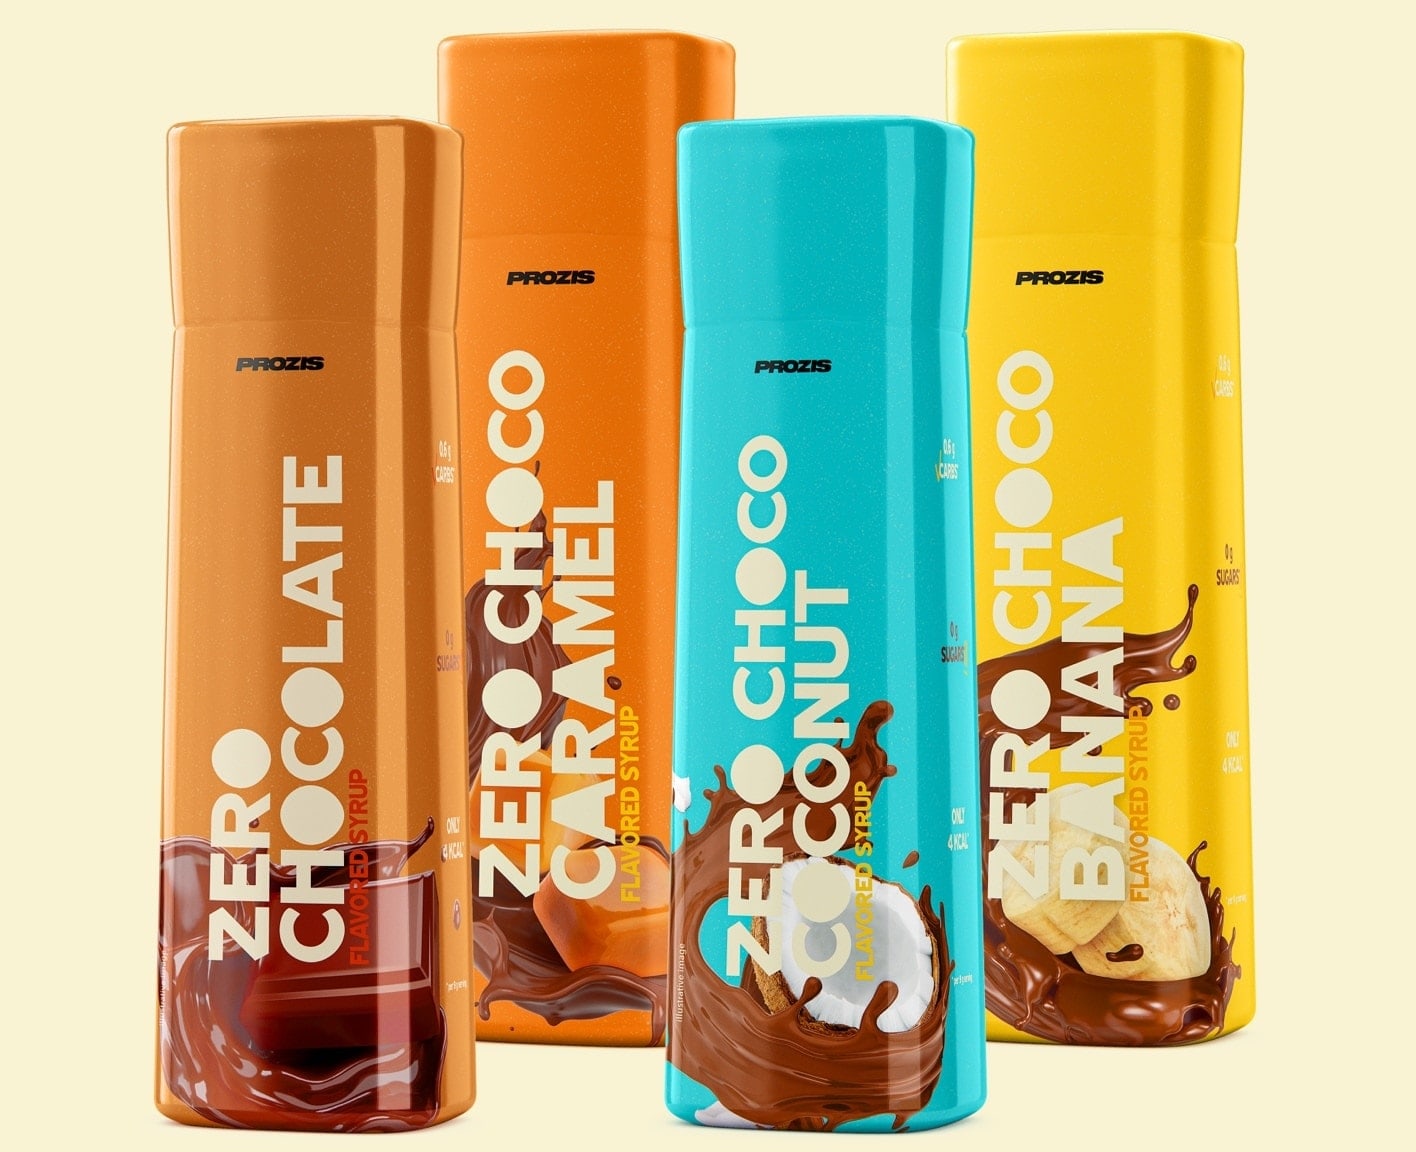 zero-chocolate-syrup-355-g-lineup-desk_1416x1152_588778_676859.jpg